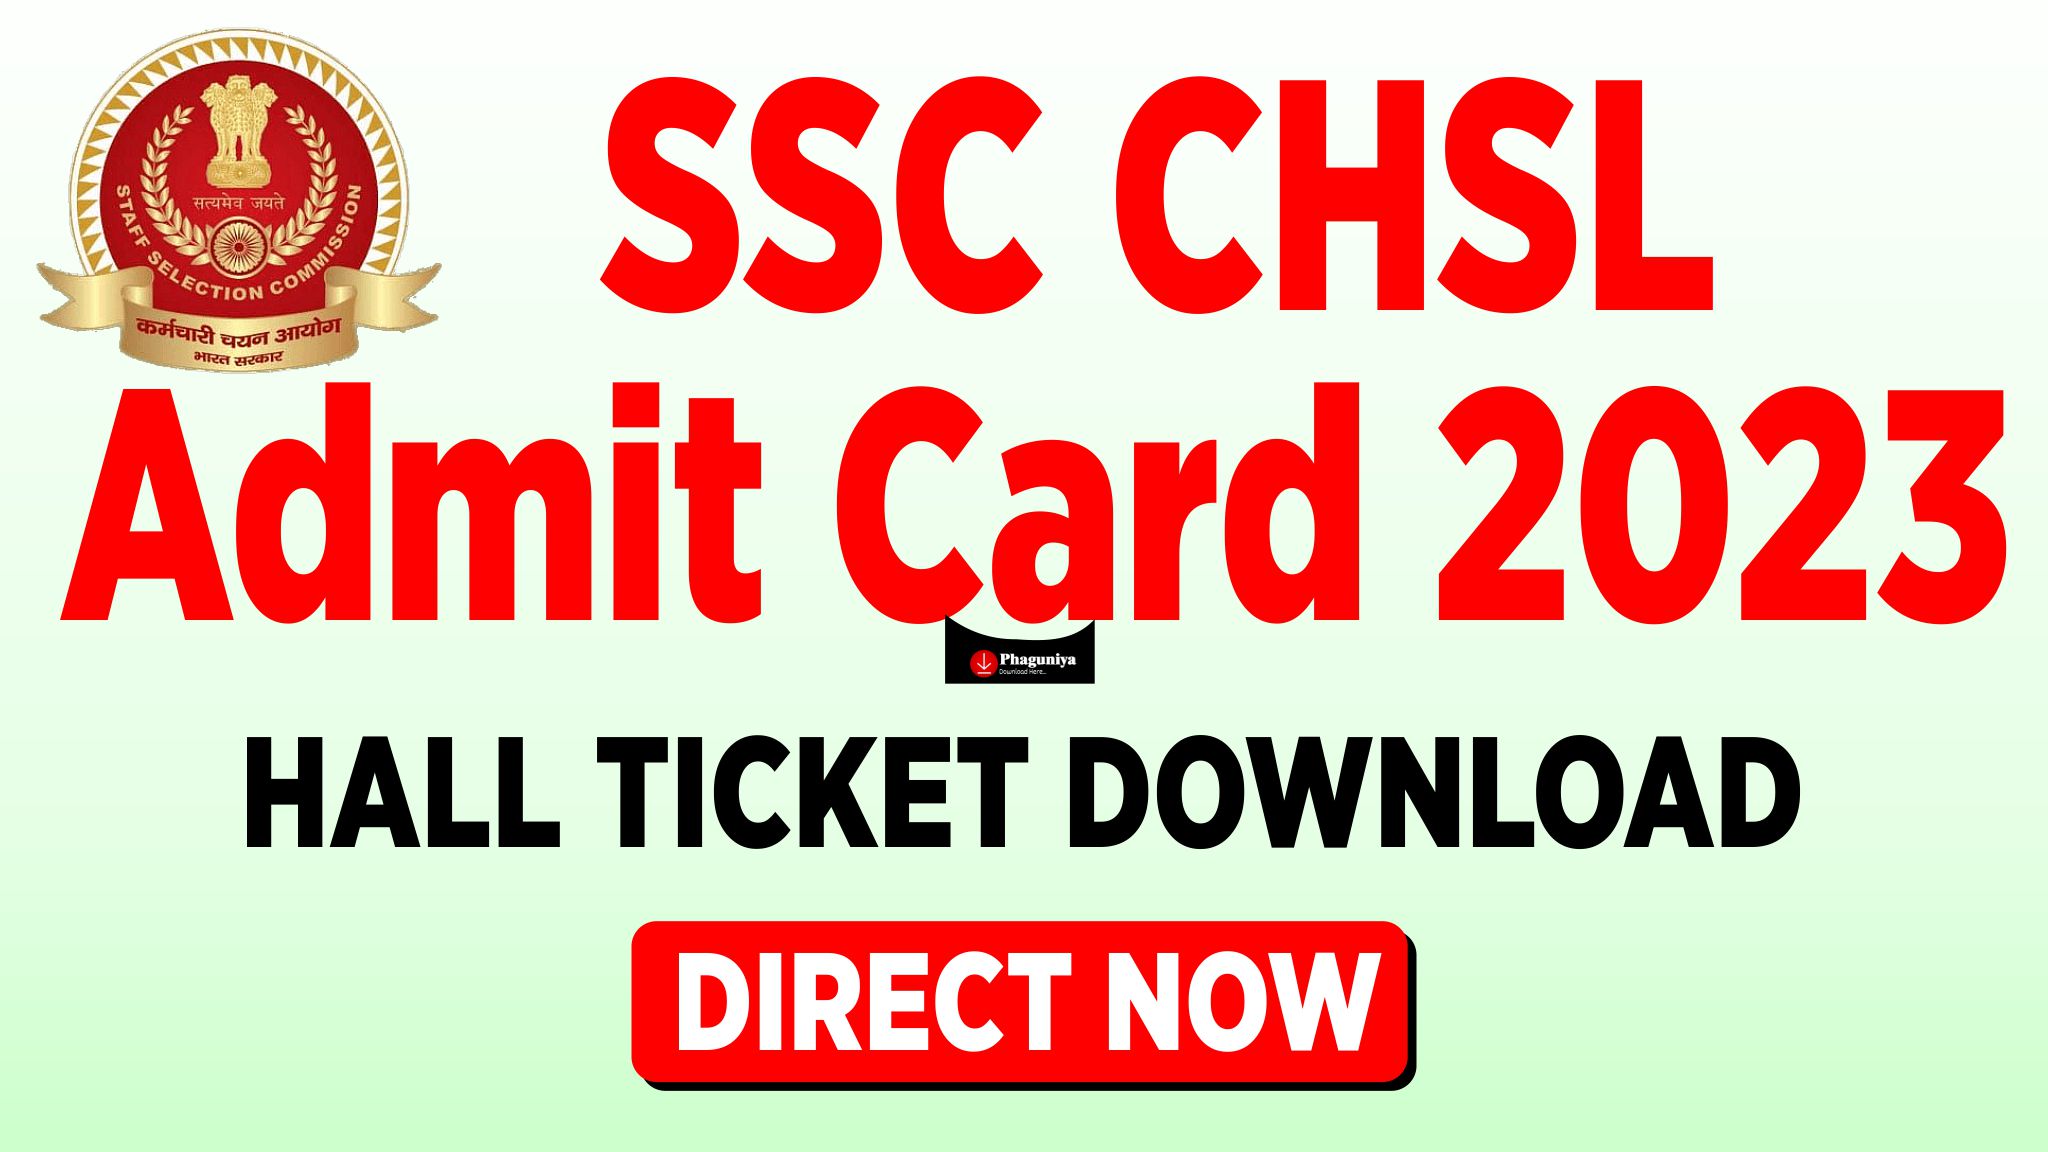 SSC CHSL Admit Card 2023, ssc.nic.in admit card 2023, ssc chsl admit card 2023 release date, ssc chsl admit card 2023 (tier 1), ssc chsl application status 2023, ssc chsl admit card download direct link, ssc chsl admit card 2023 sarkari result, ssc chsl exam date 2023, ssc chsl admit card 2023 in hindi, ssc chsl admit card 2023, ssc chsl admit card download direct link, ssc chsl admit card date 2023, ssc chsl admit card 2023 sarkari result, ssc gd admit card, ssc admit card, ssc chsl admit card 2023 tier 1, ssc login,